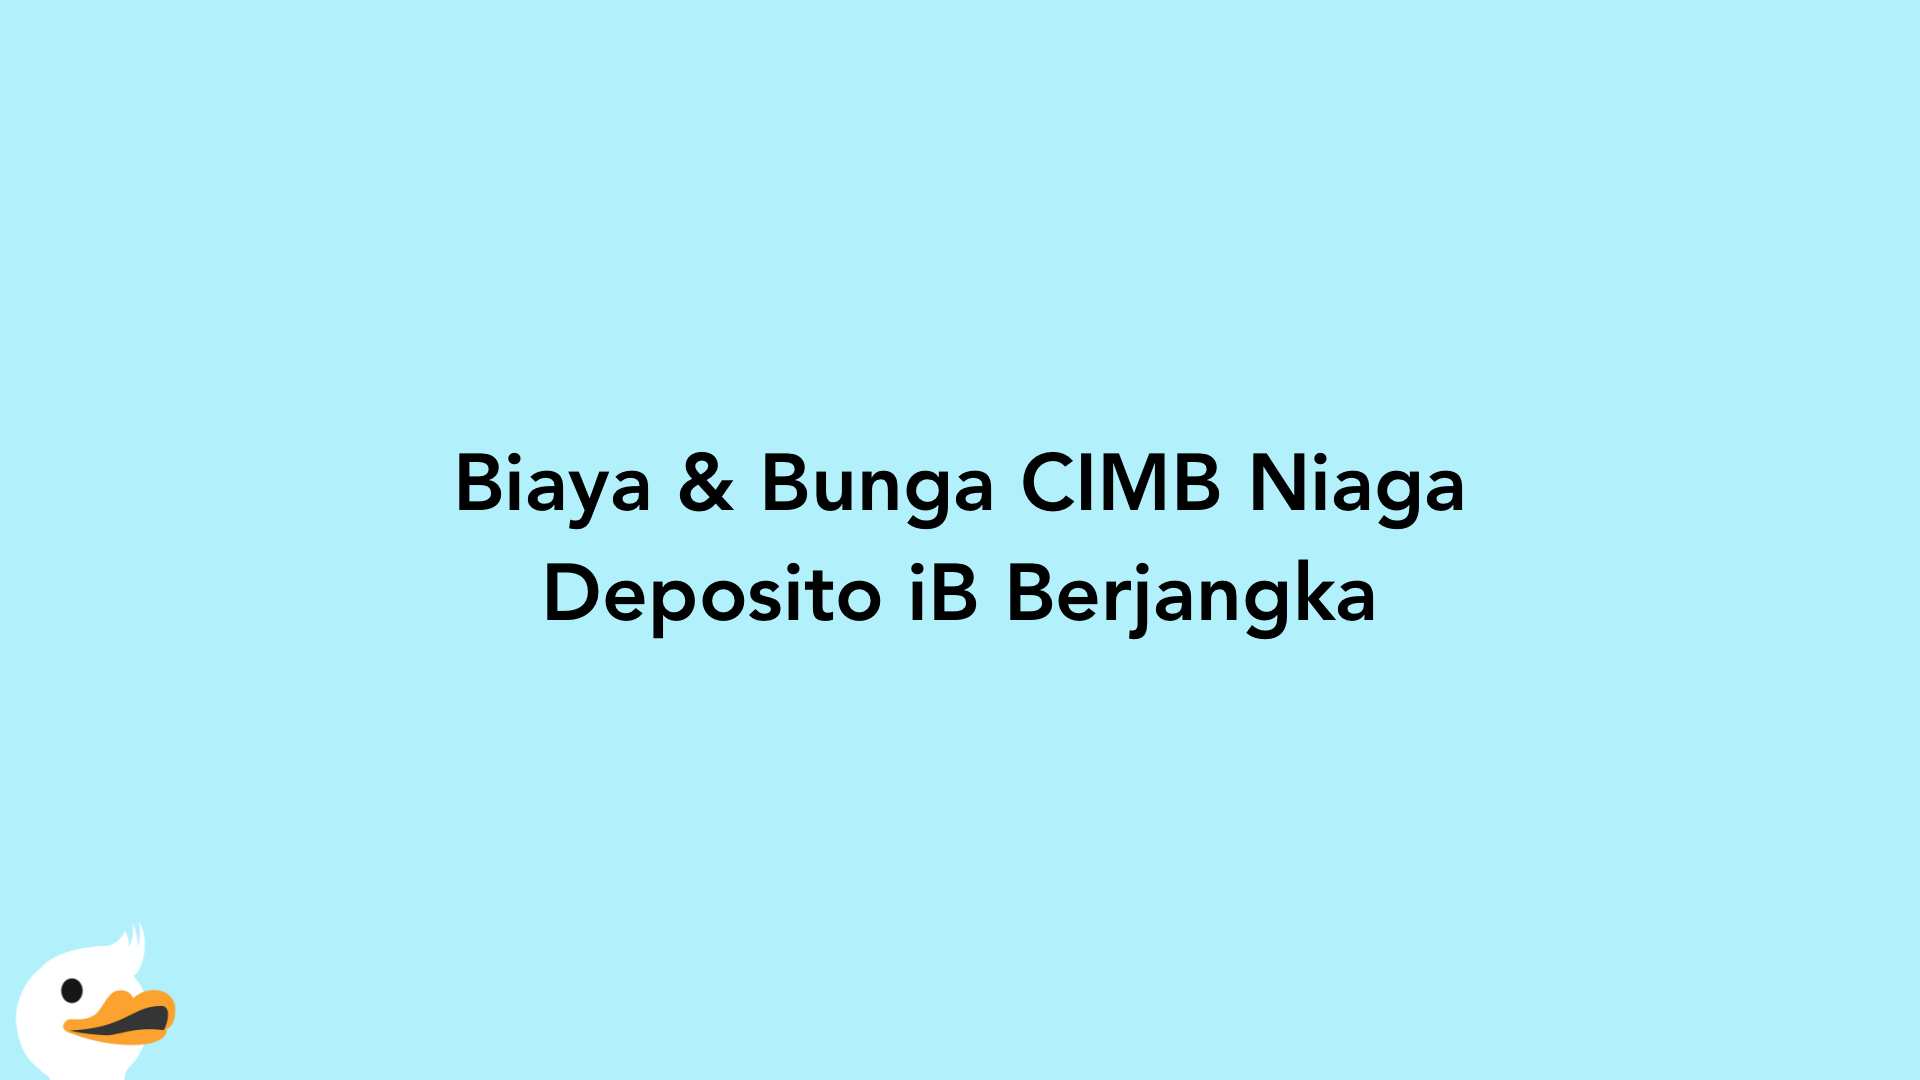 Biaya & Bunga CIMB Niaga Deposito iB Berjangka